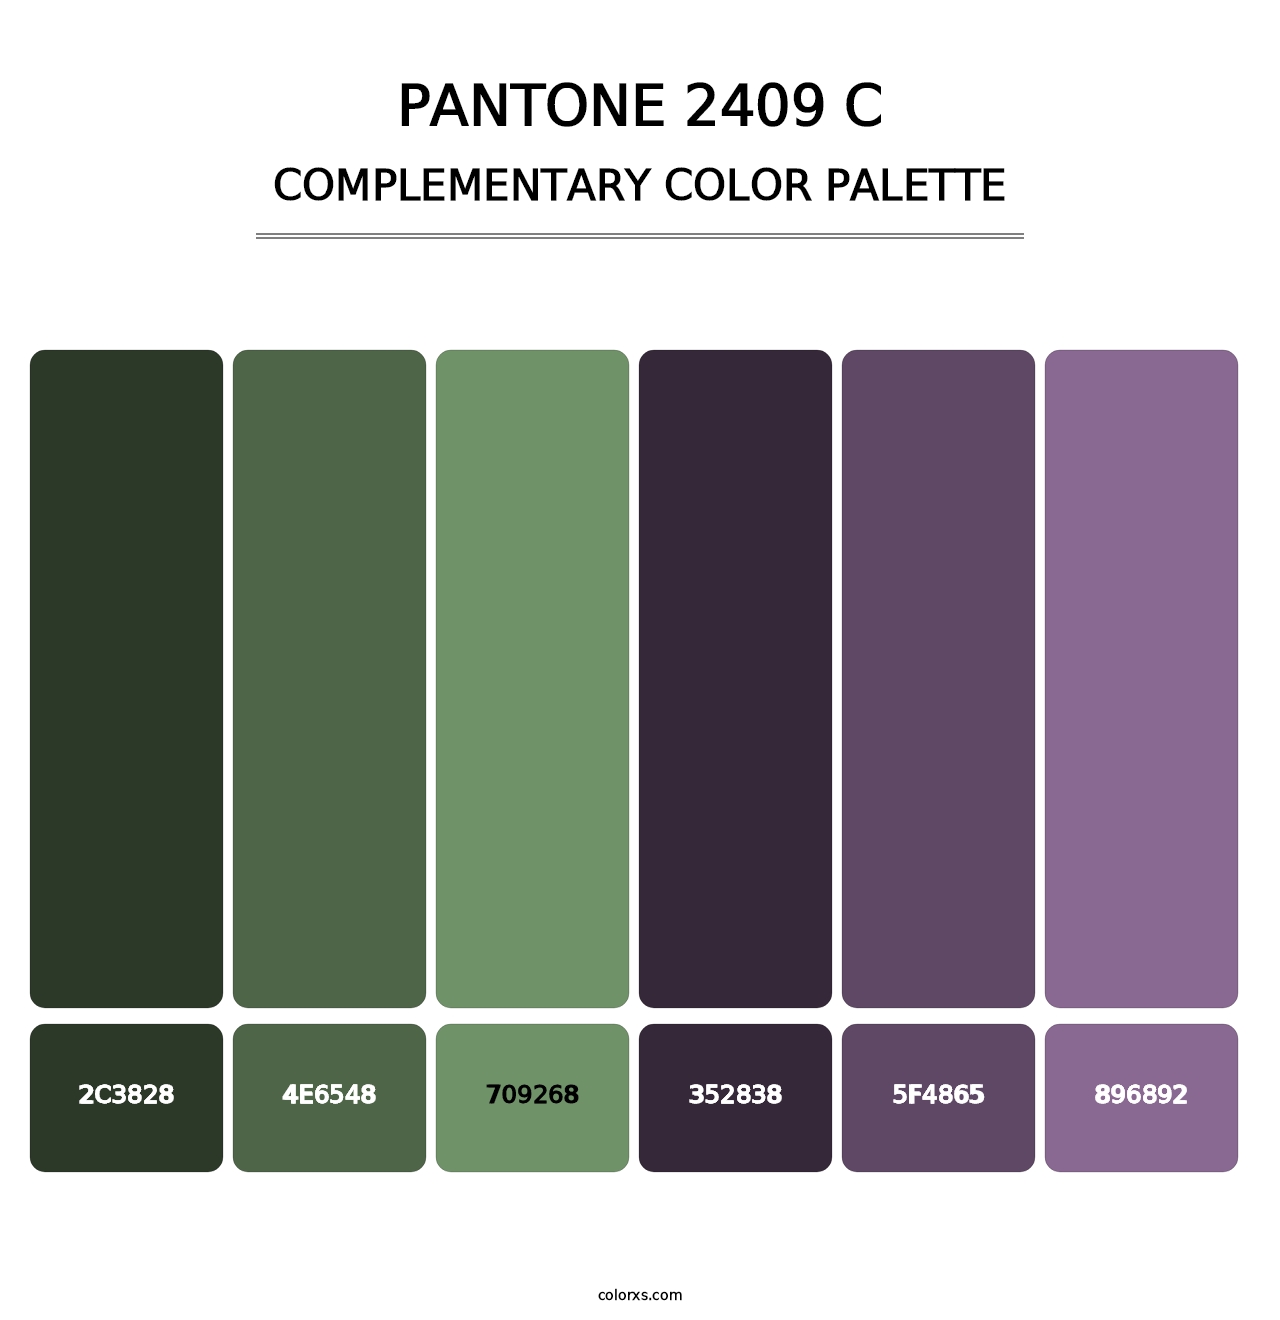 PANTONE 2409 C - Complementary Color Palette